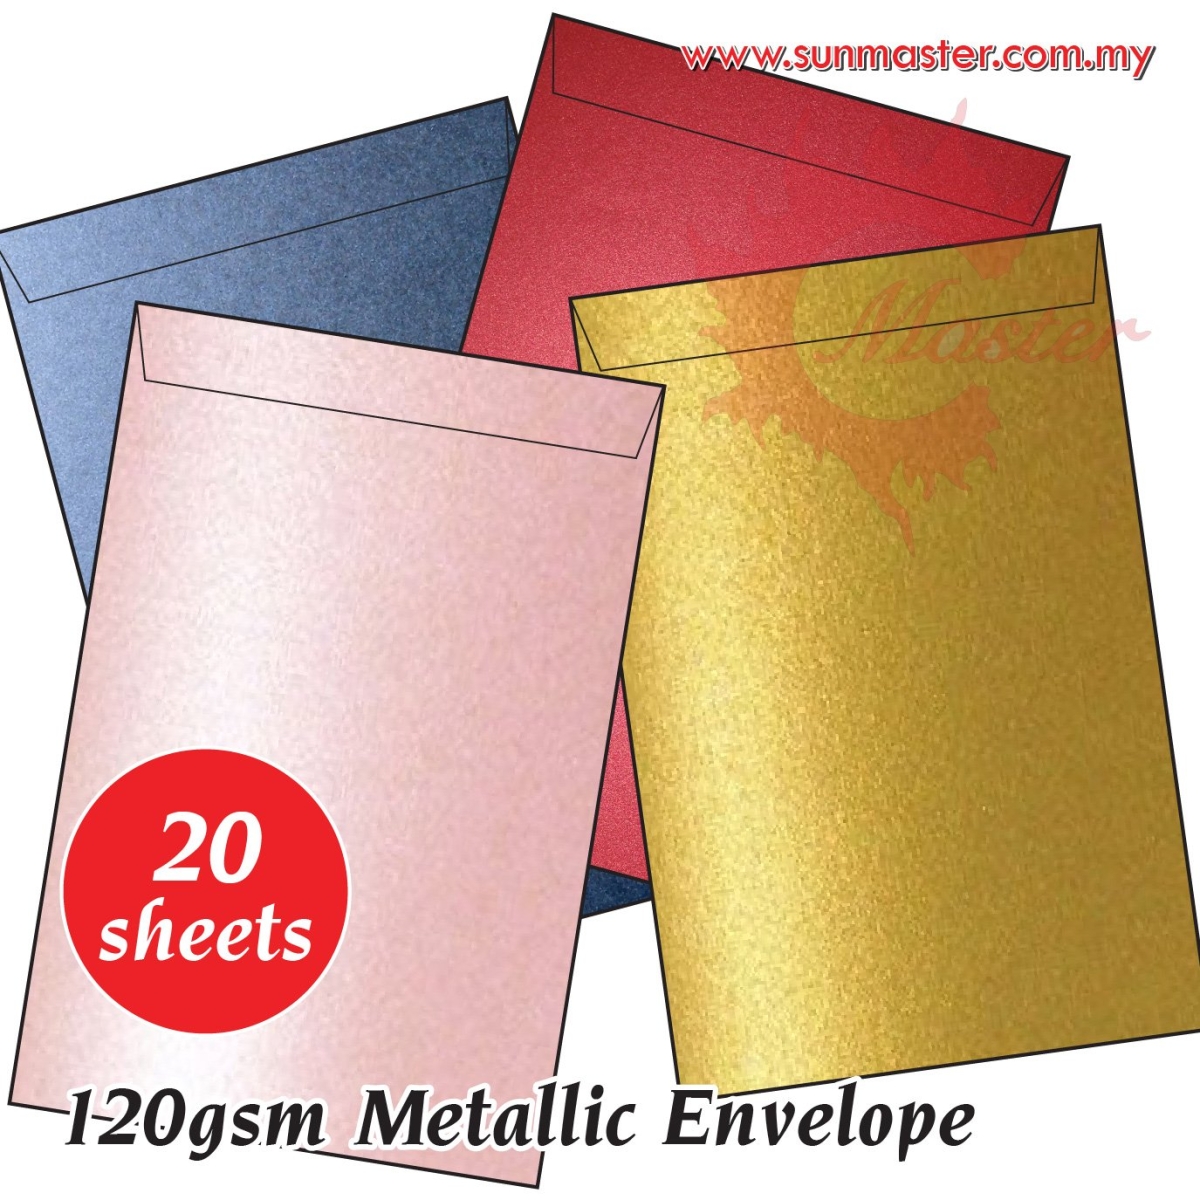 6 X 9 Metallic Envelope 20s Metallic Envelopes çç çº¸ä¿¡å° Envelopes ä¿¡å° Supplier Supply Supplies